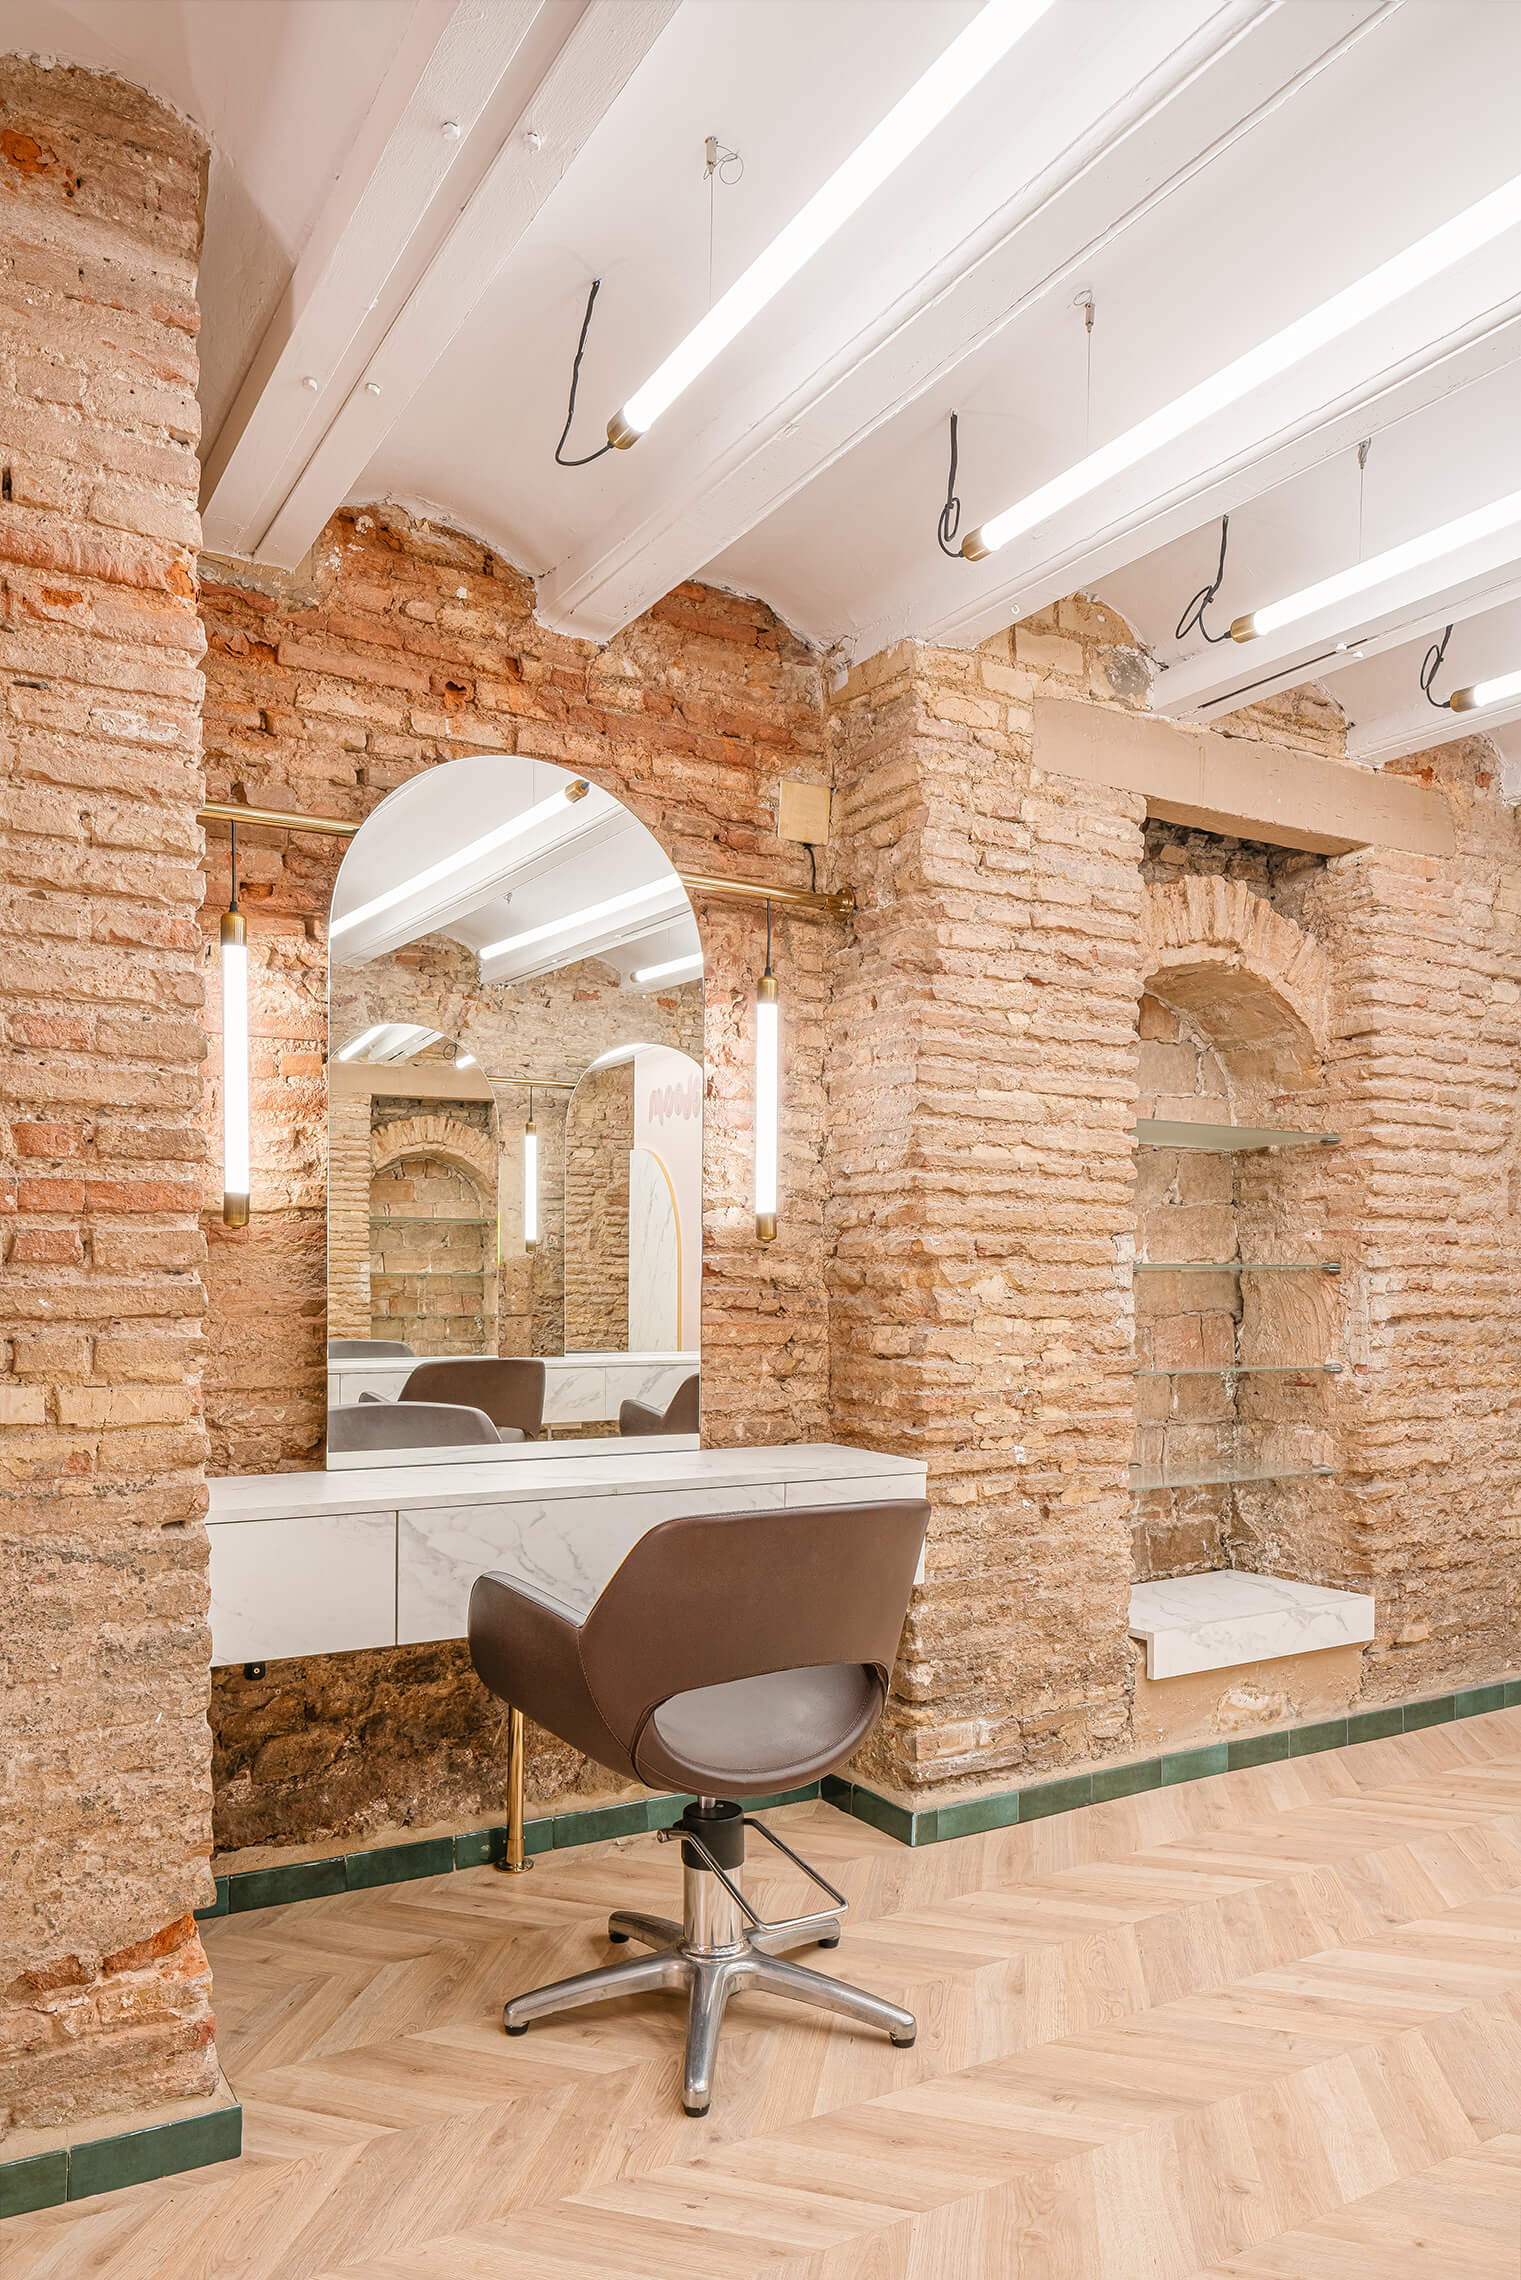 Proyecto de interiorismo del salón de peluquería Moods de Valencia.